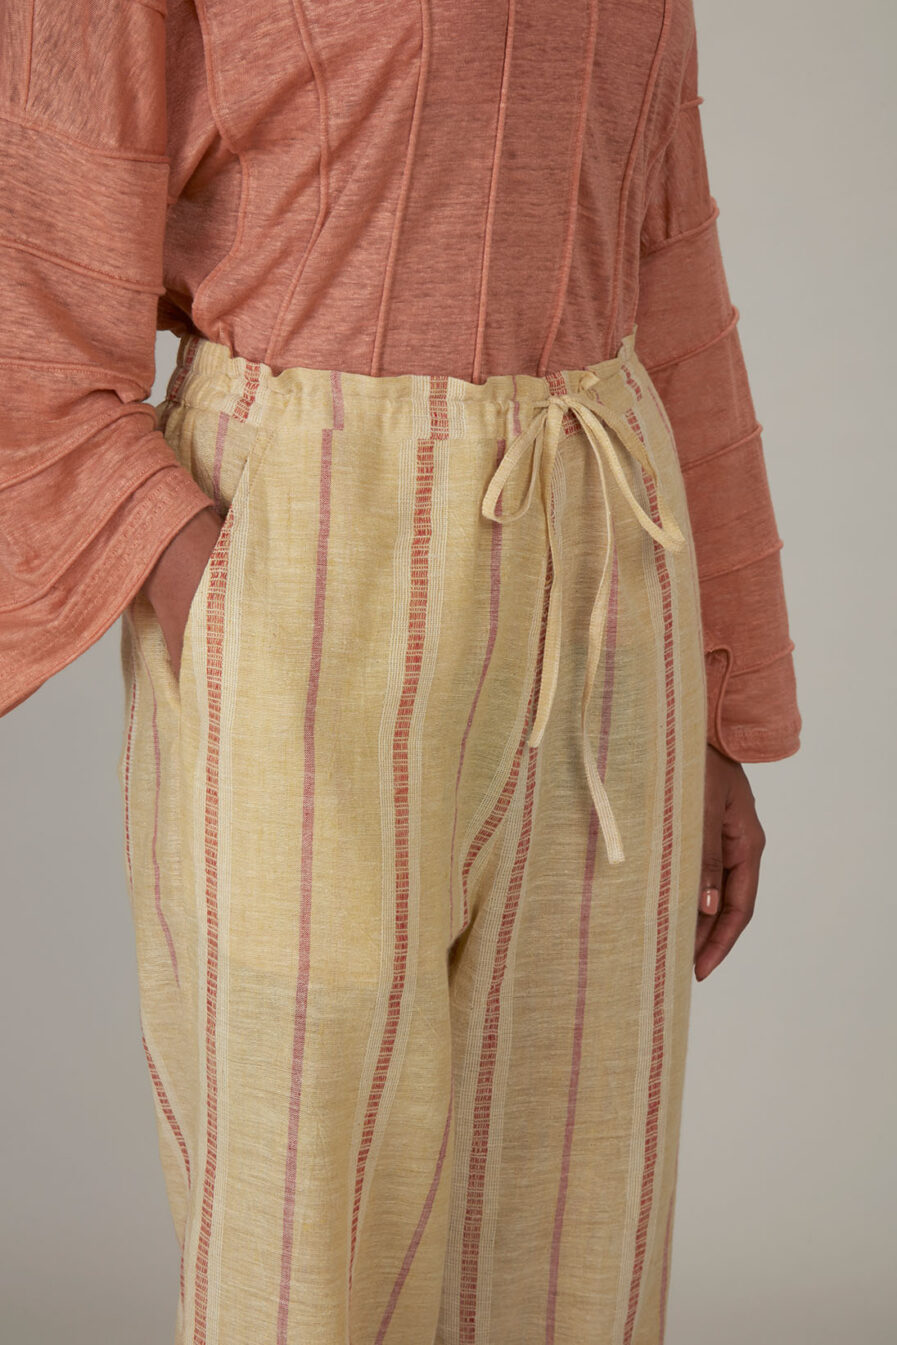 Anavila Yellow Striped Organic Cotton Trouser